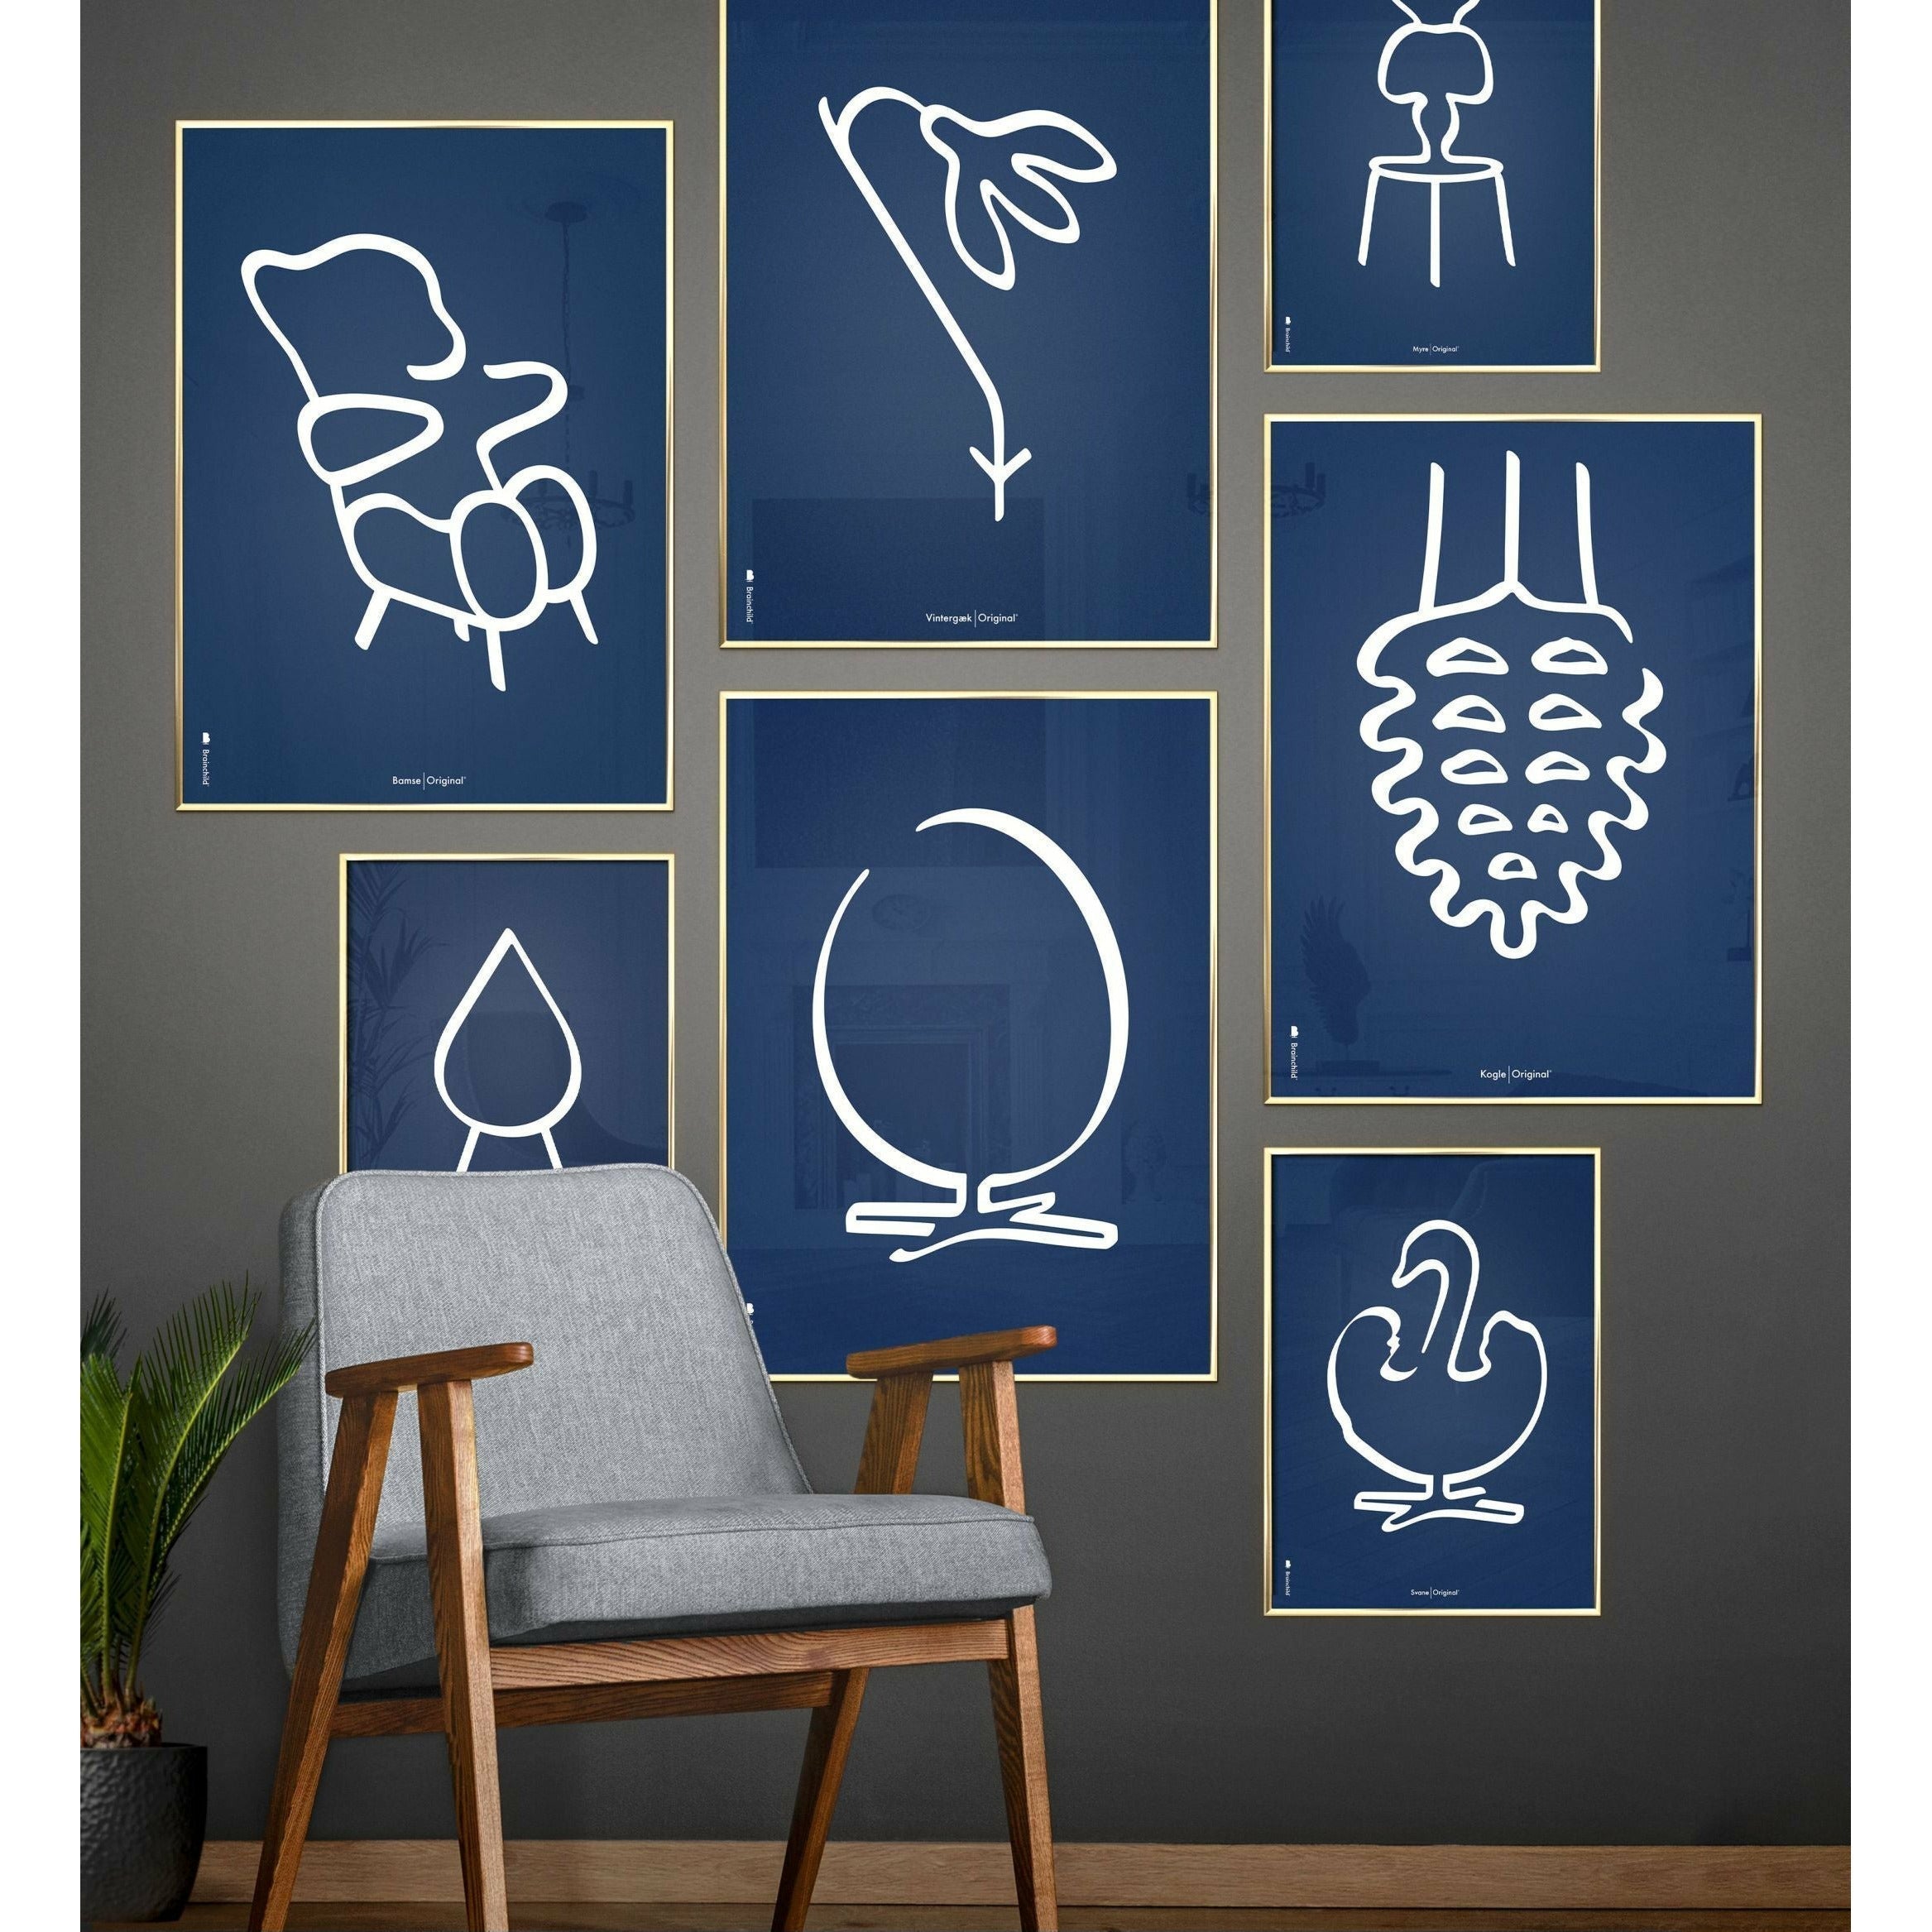 Brainchild Drop Line Poster, Frame Made Of Light Wood 50x70 Cm, Blue Background